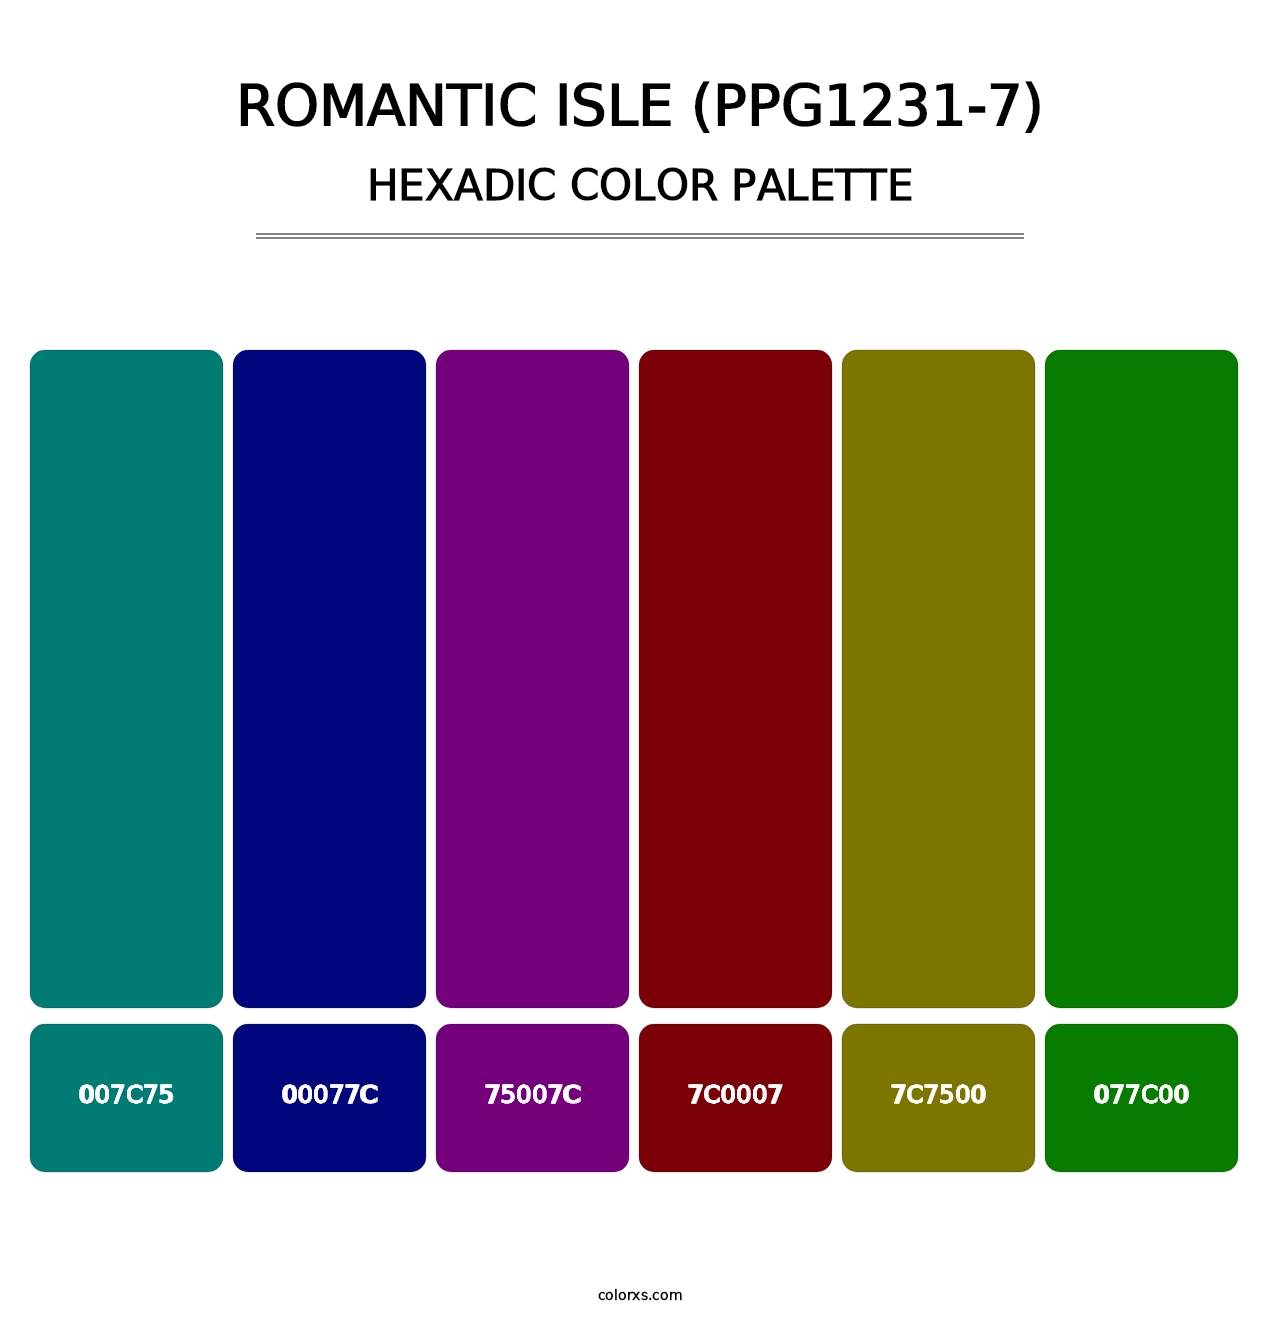 Romantic Isle (PPG1231-7) - Hexadic Color Palette